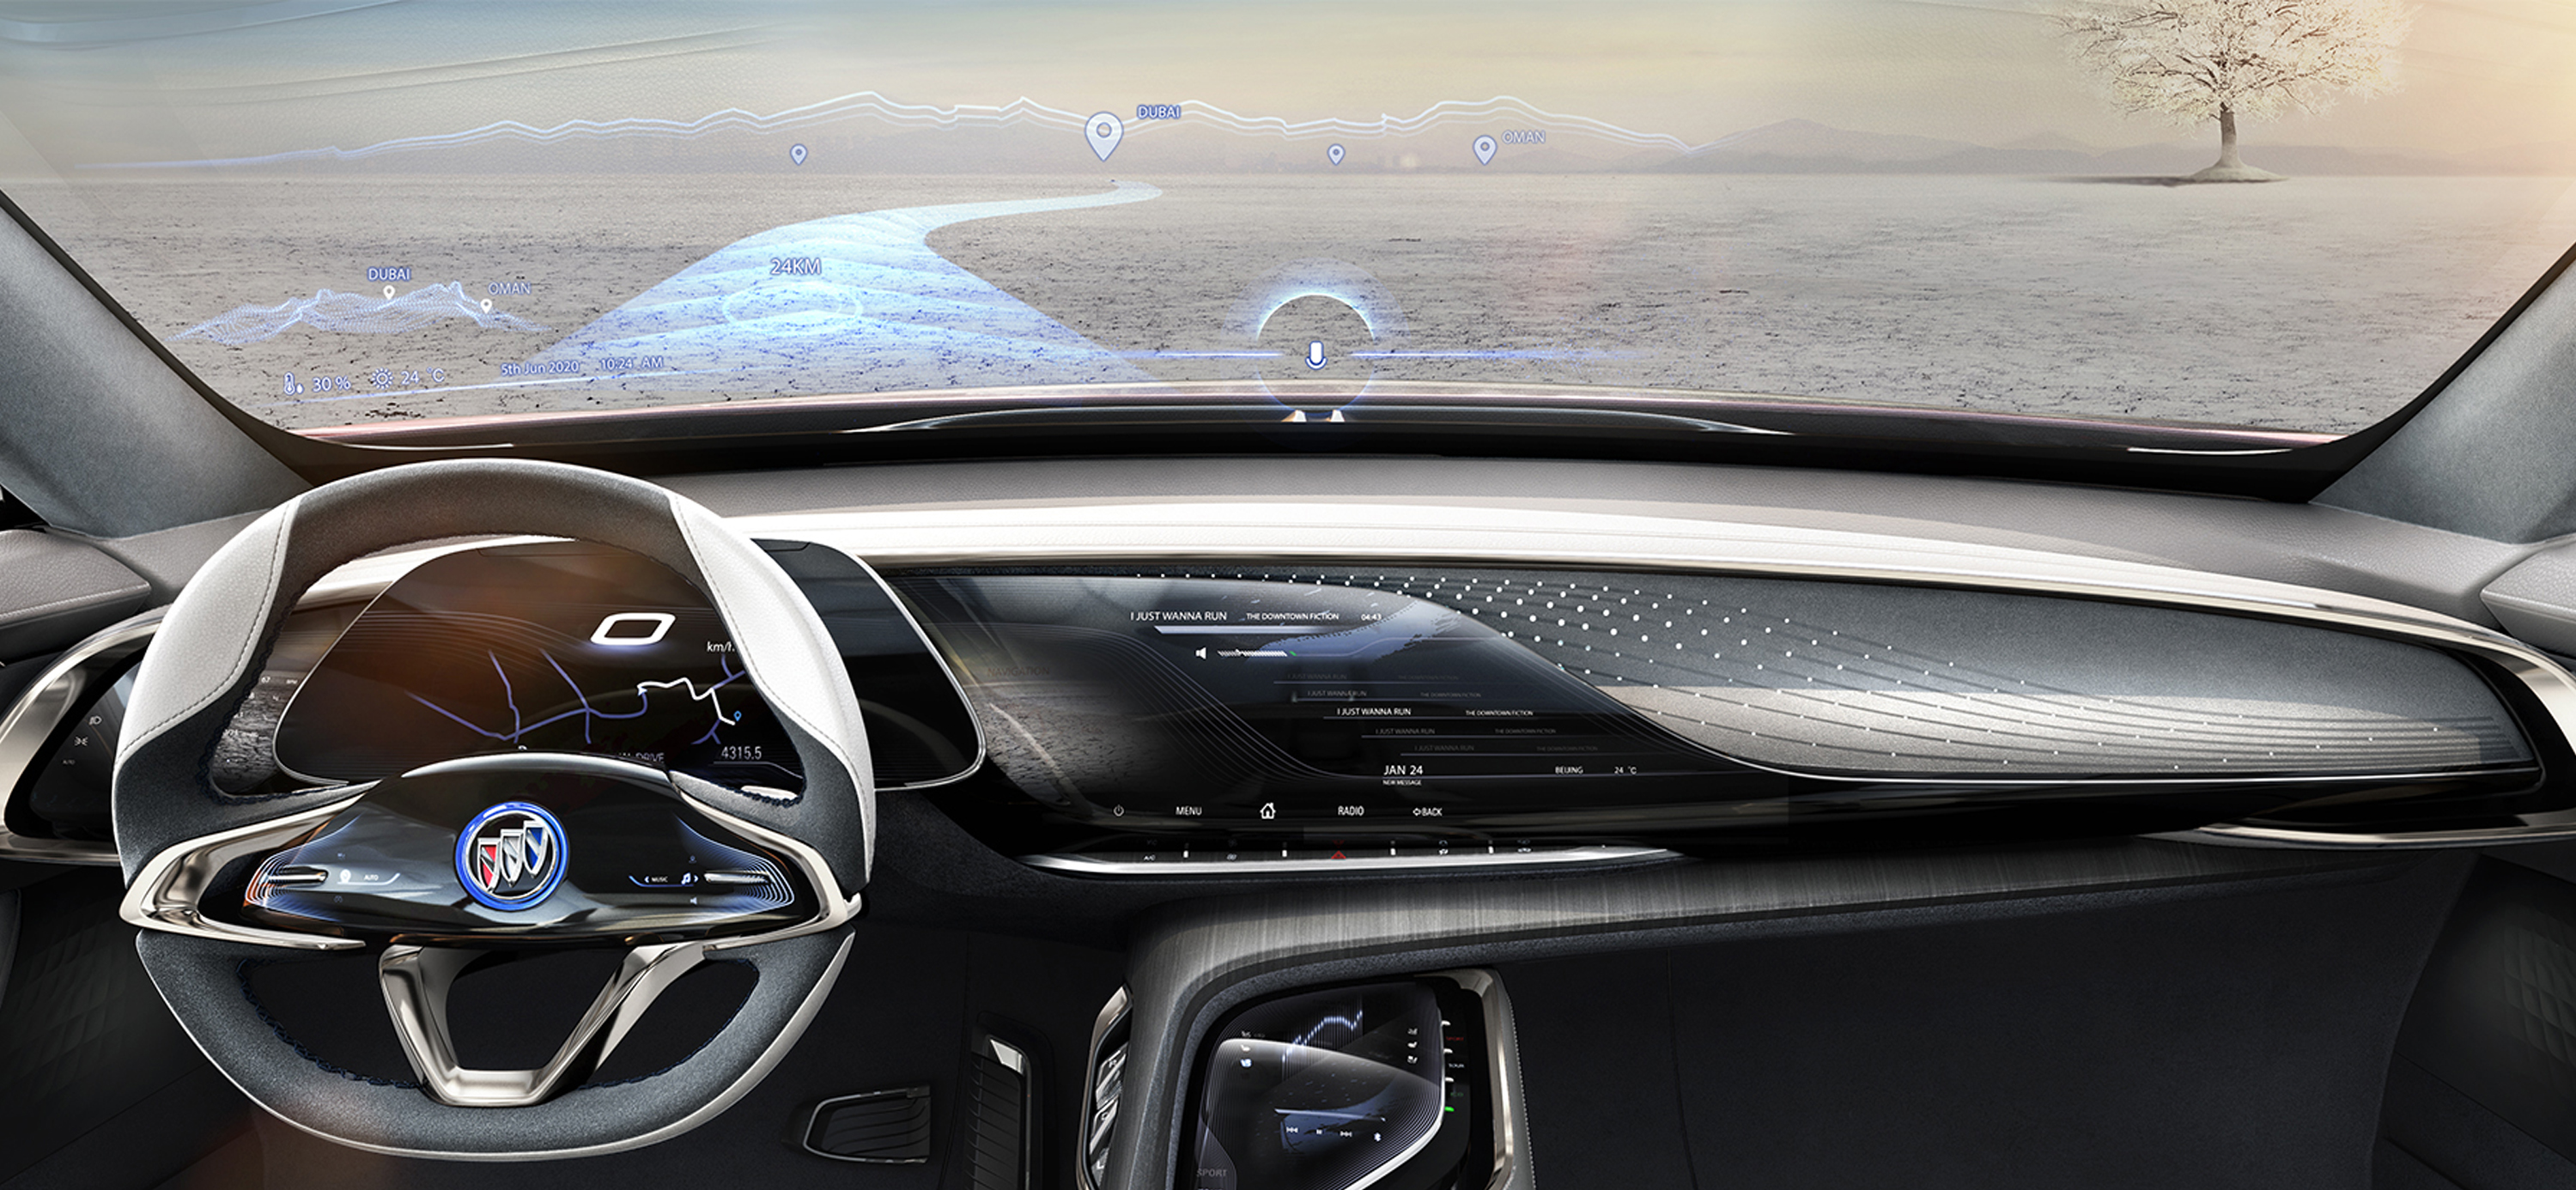 Buick, 600 km menzilli Enspire SUV konseptini tanıttı